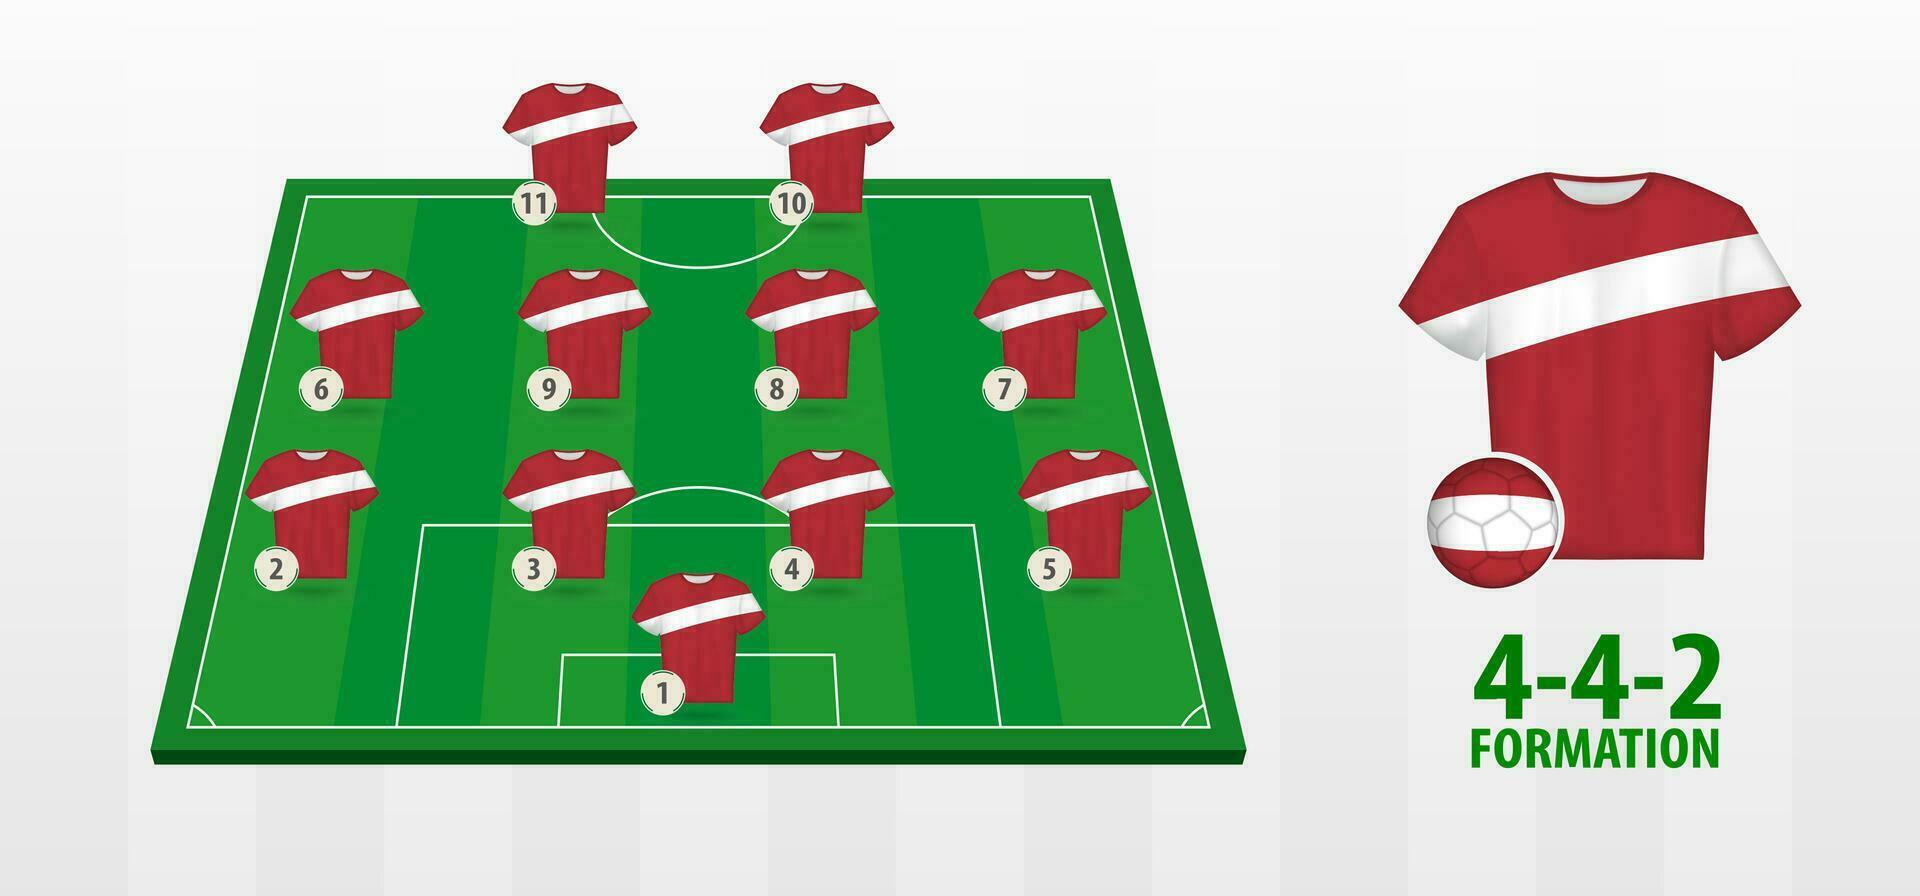 Latvia National Football Team Formation on Football Field. vector